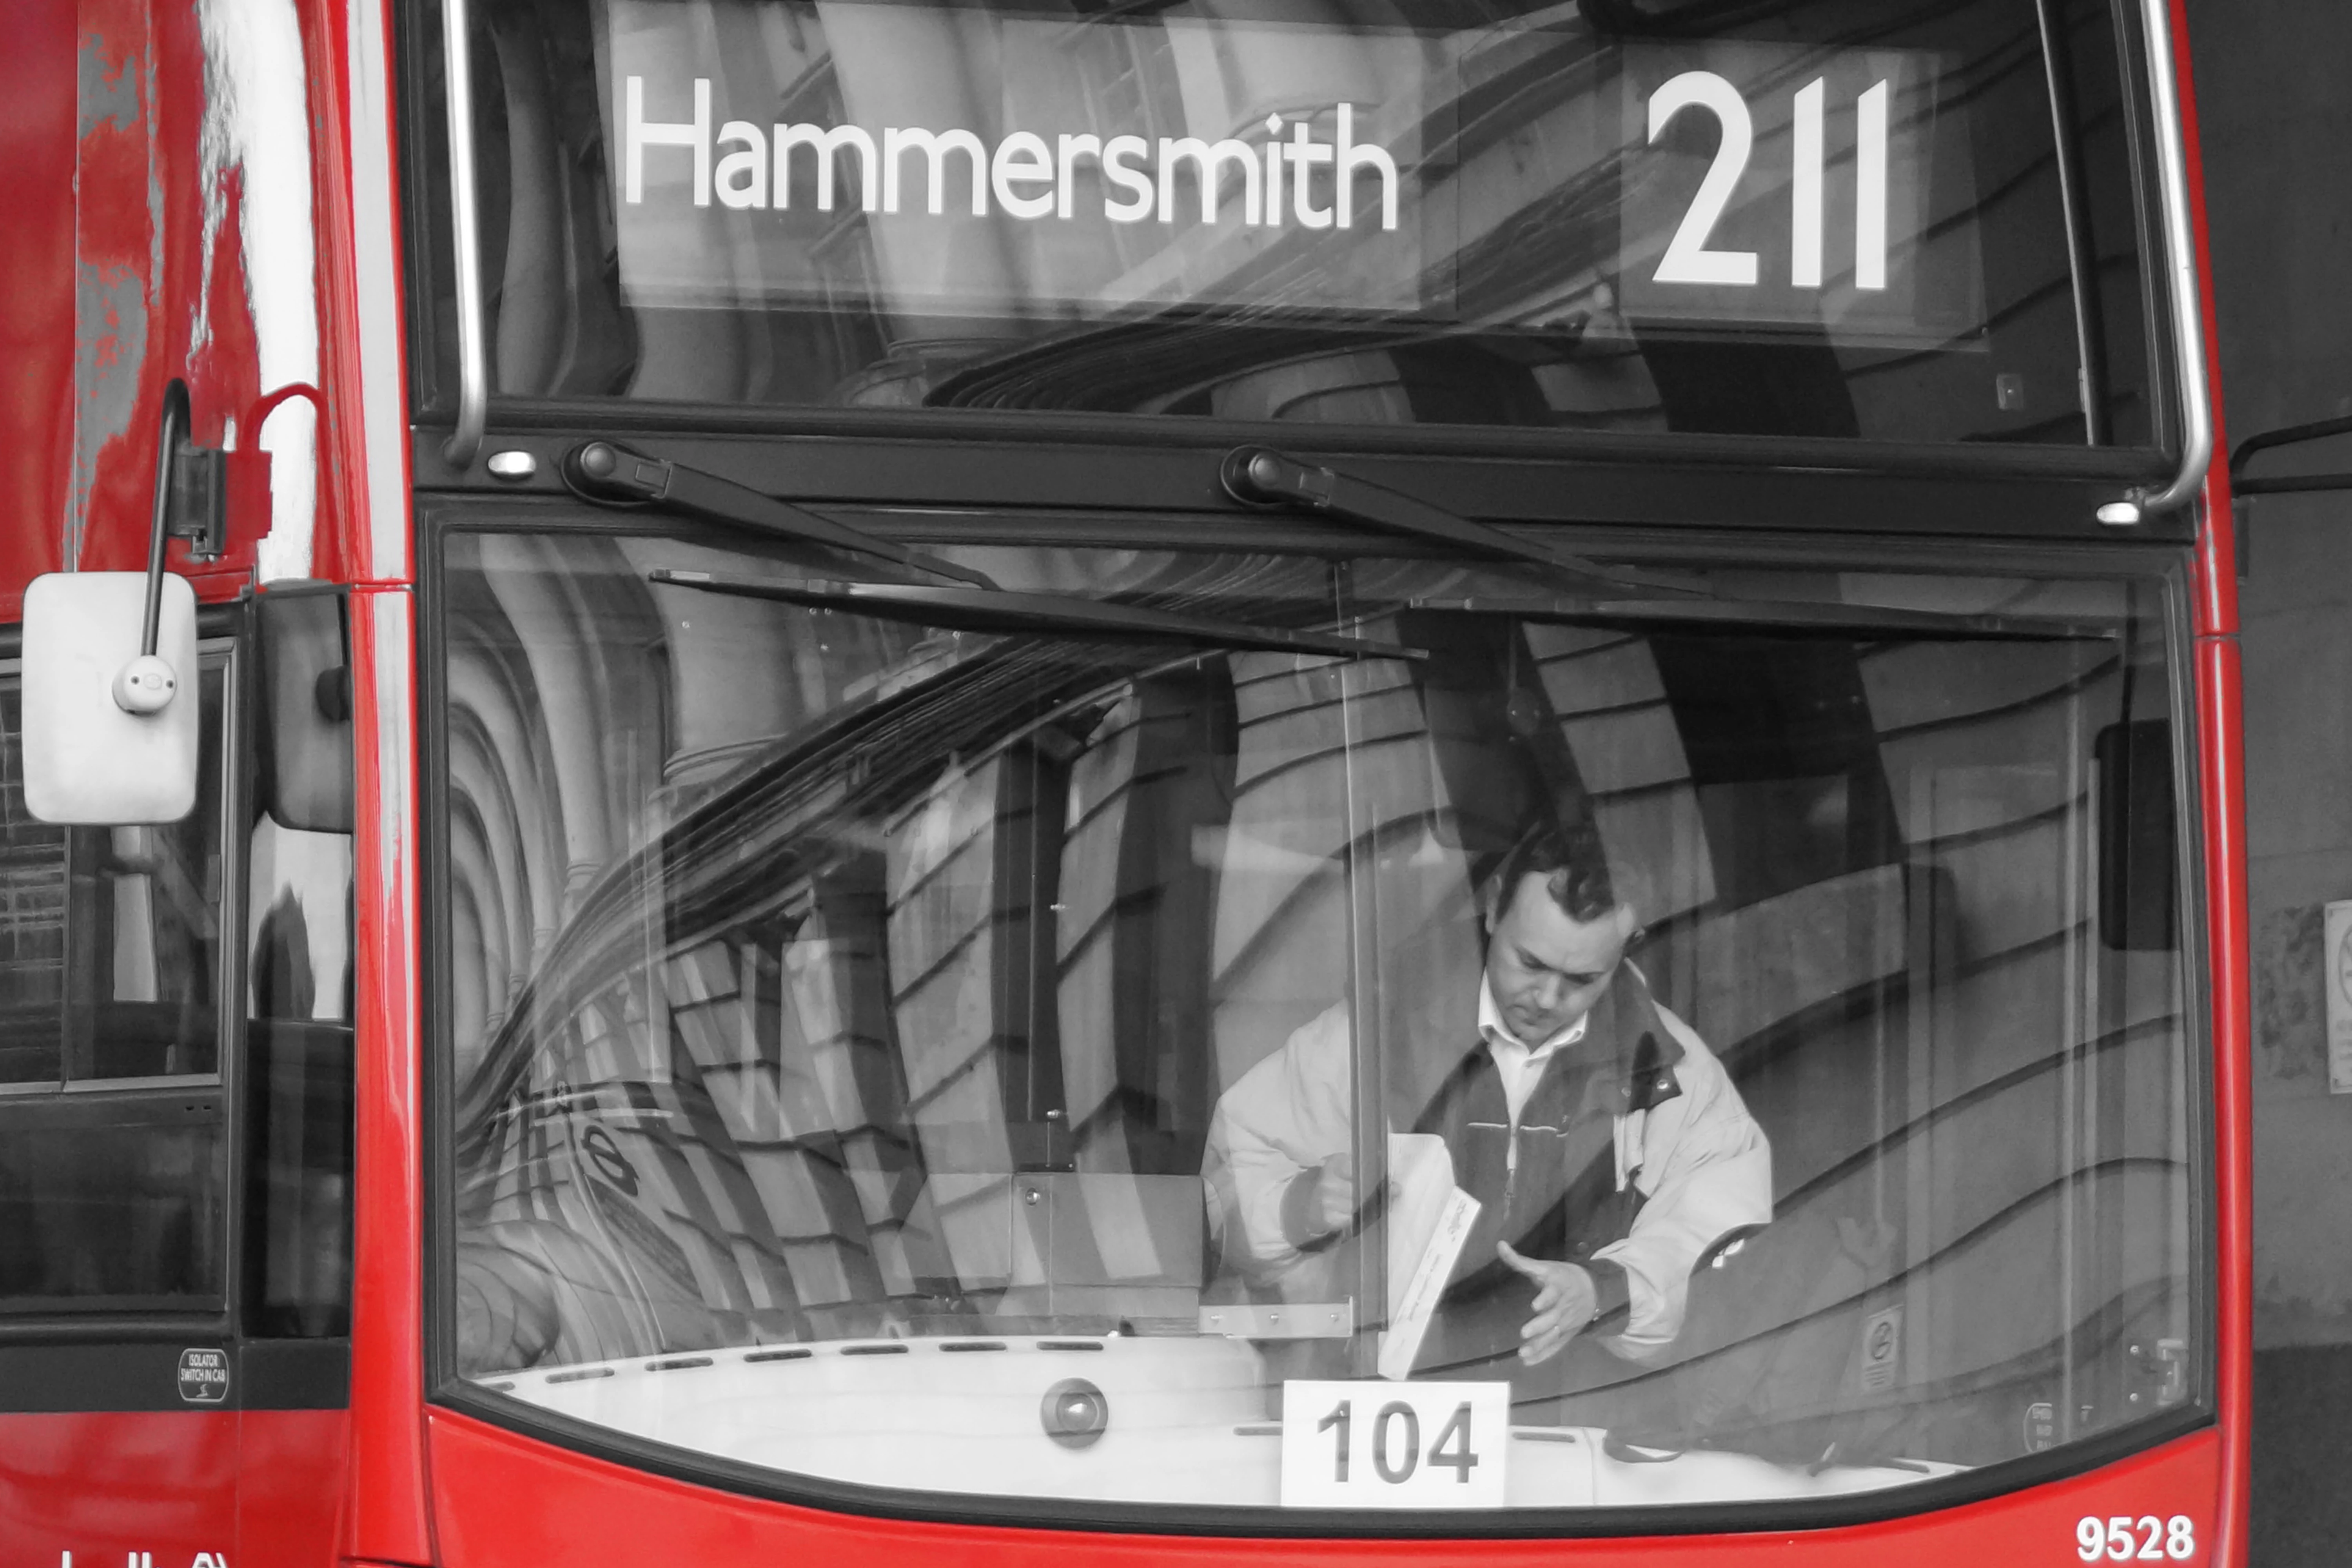 Hammersmith 211